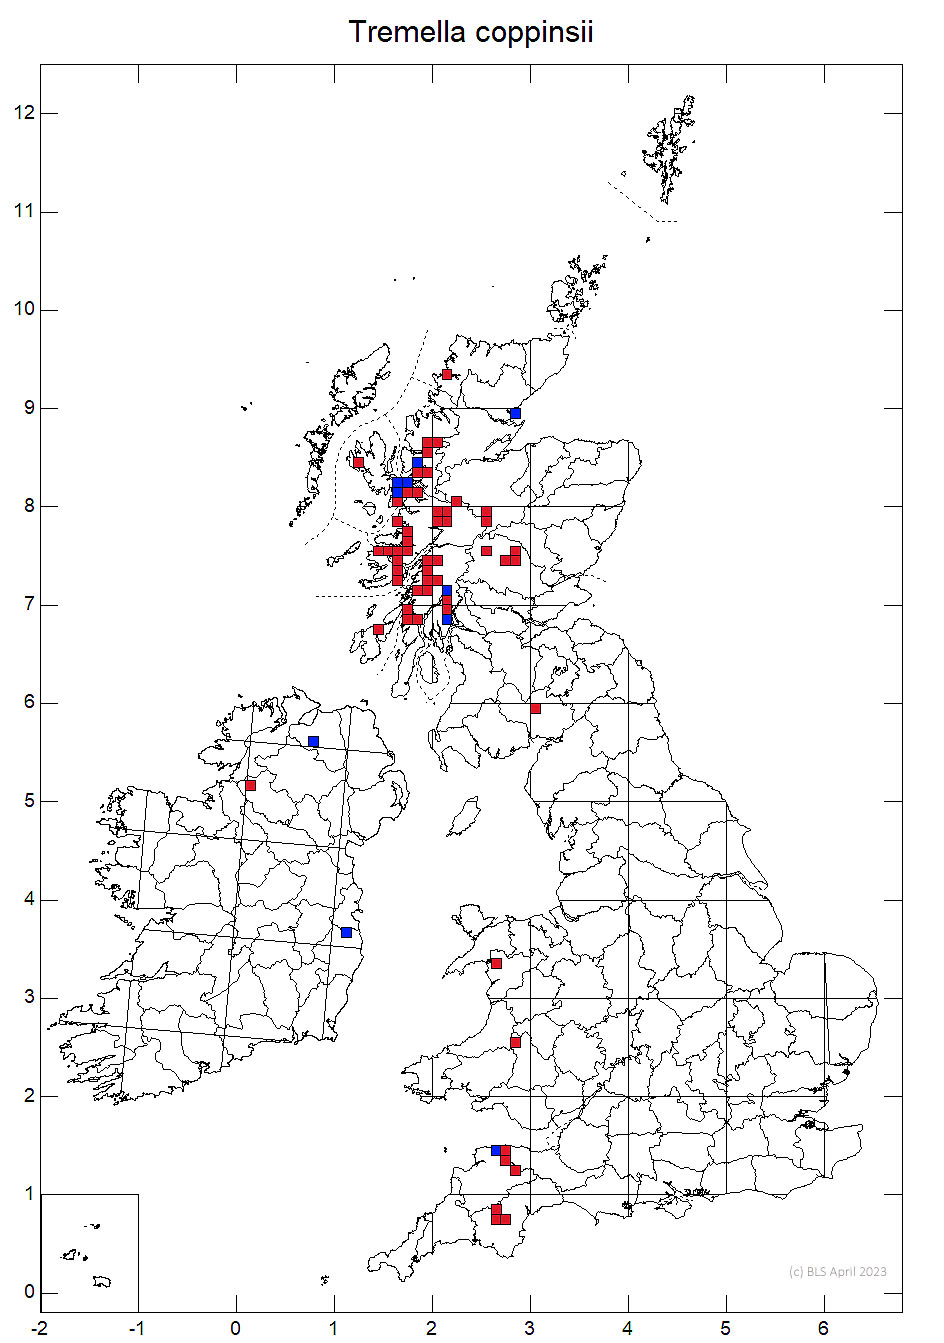 Tremella coppinsii 10km sq distribution map